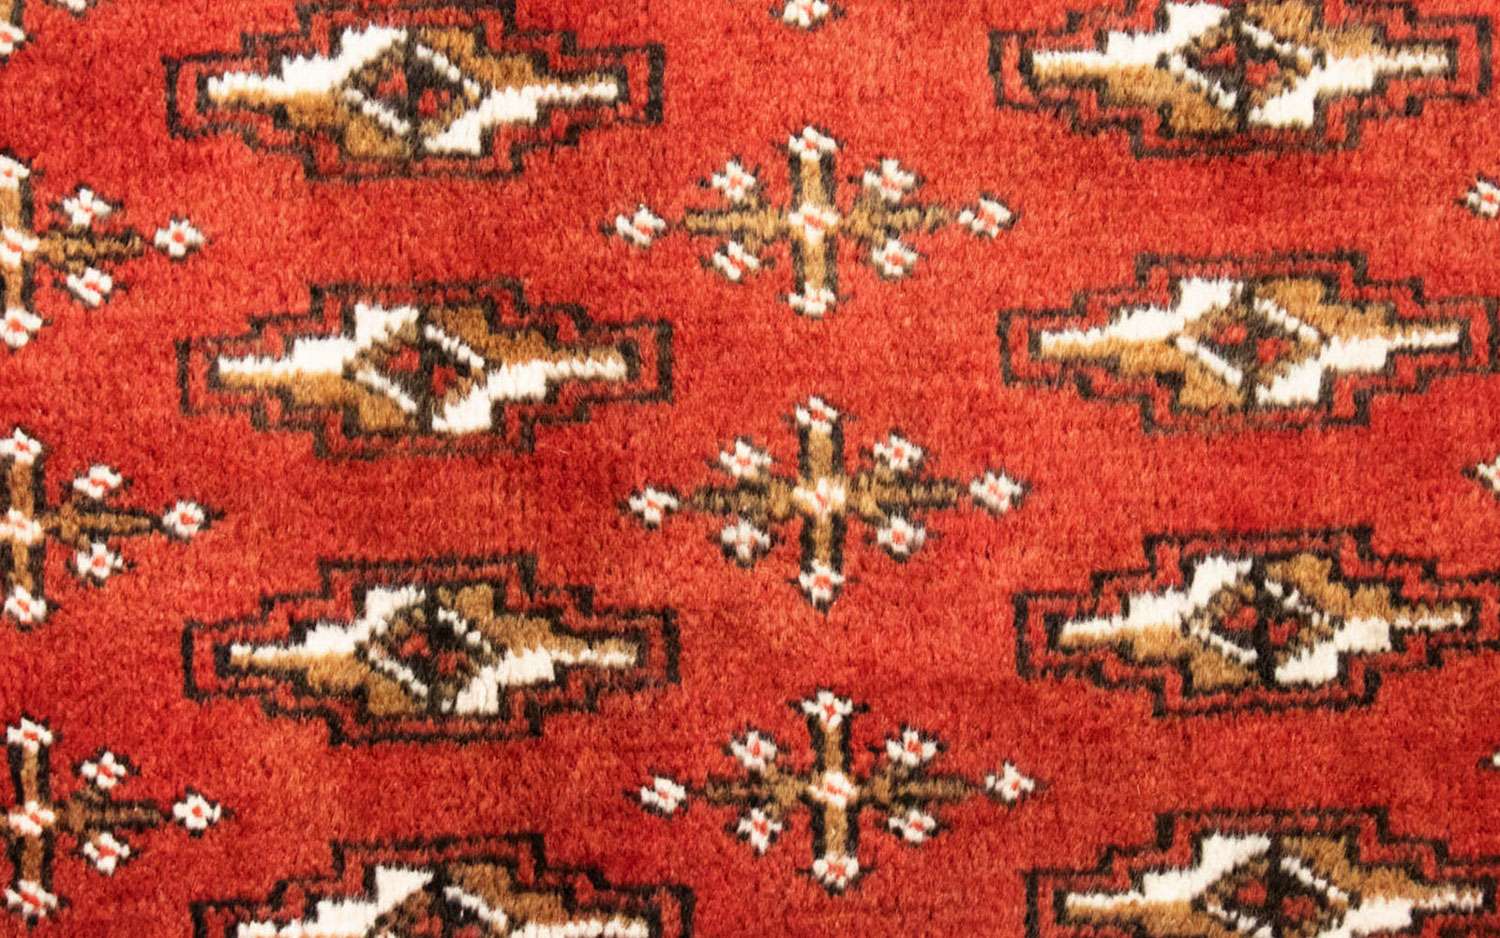 Turkaman tapijt - 130 x 60 cm - roest